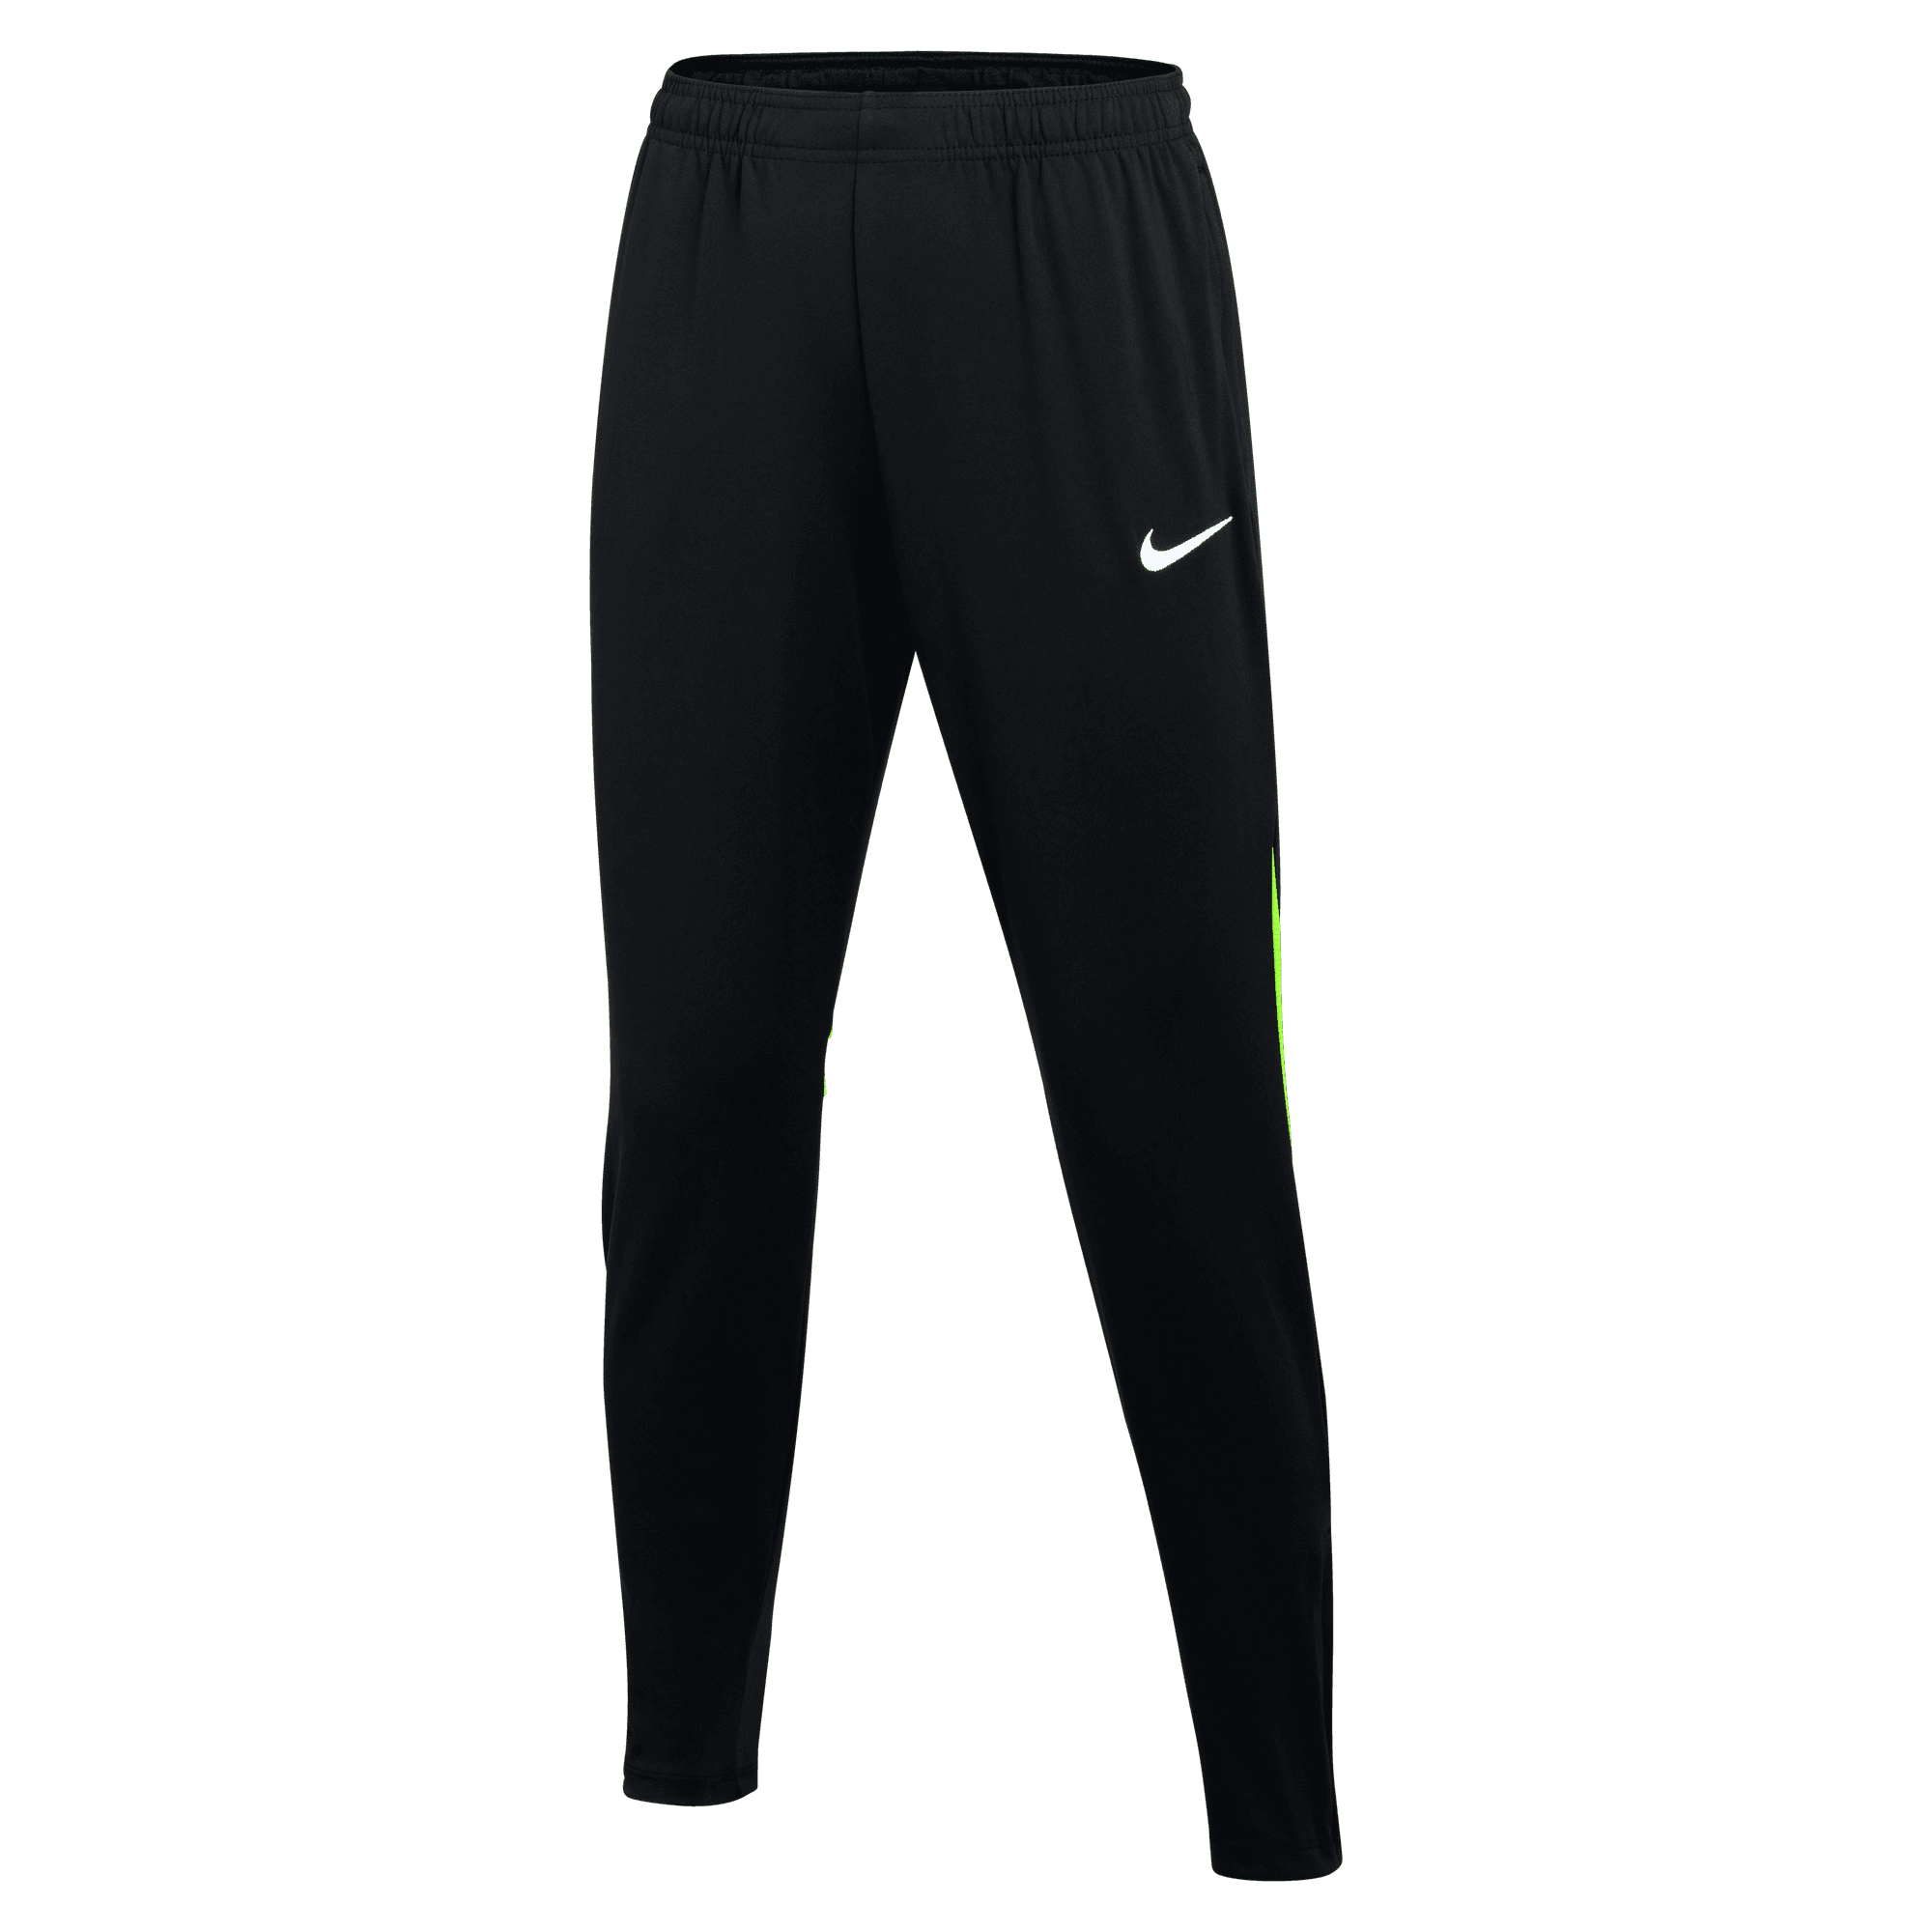 New NIKE Women's Power Training Pants X-Small Black 933832-010 –  PremierSports